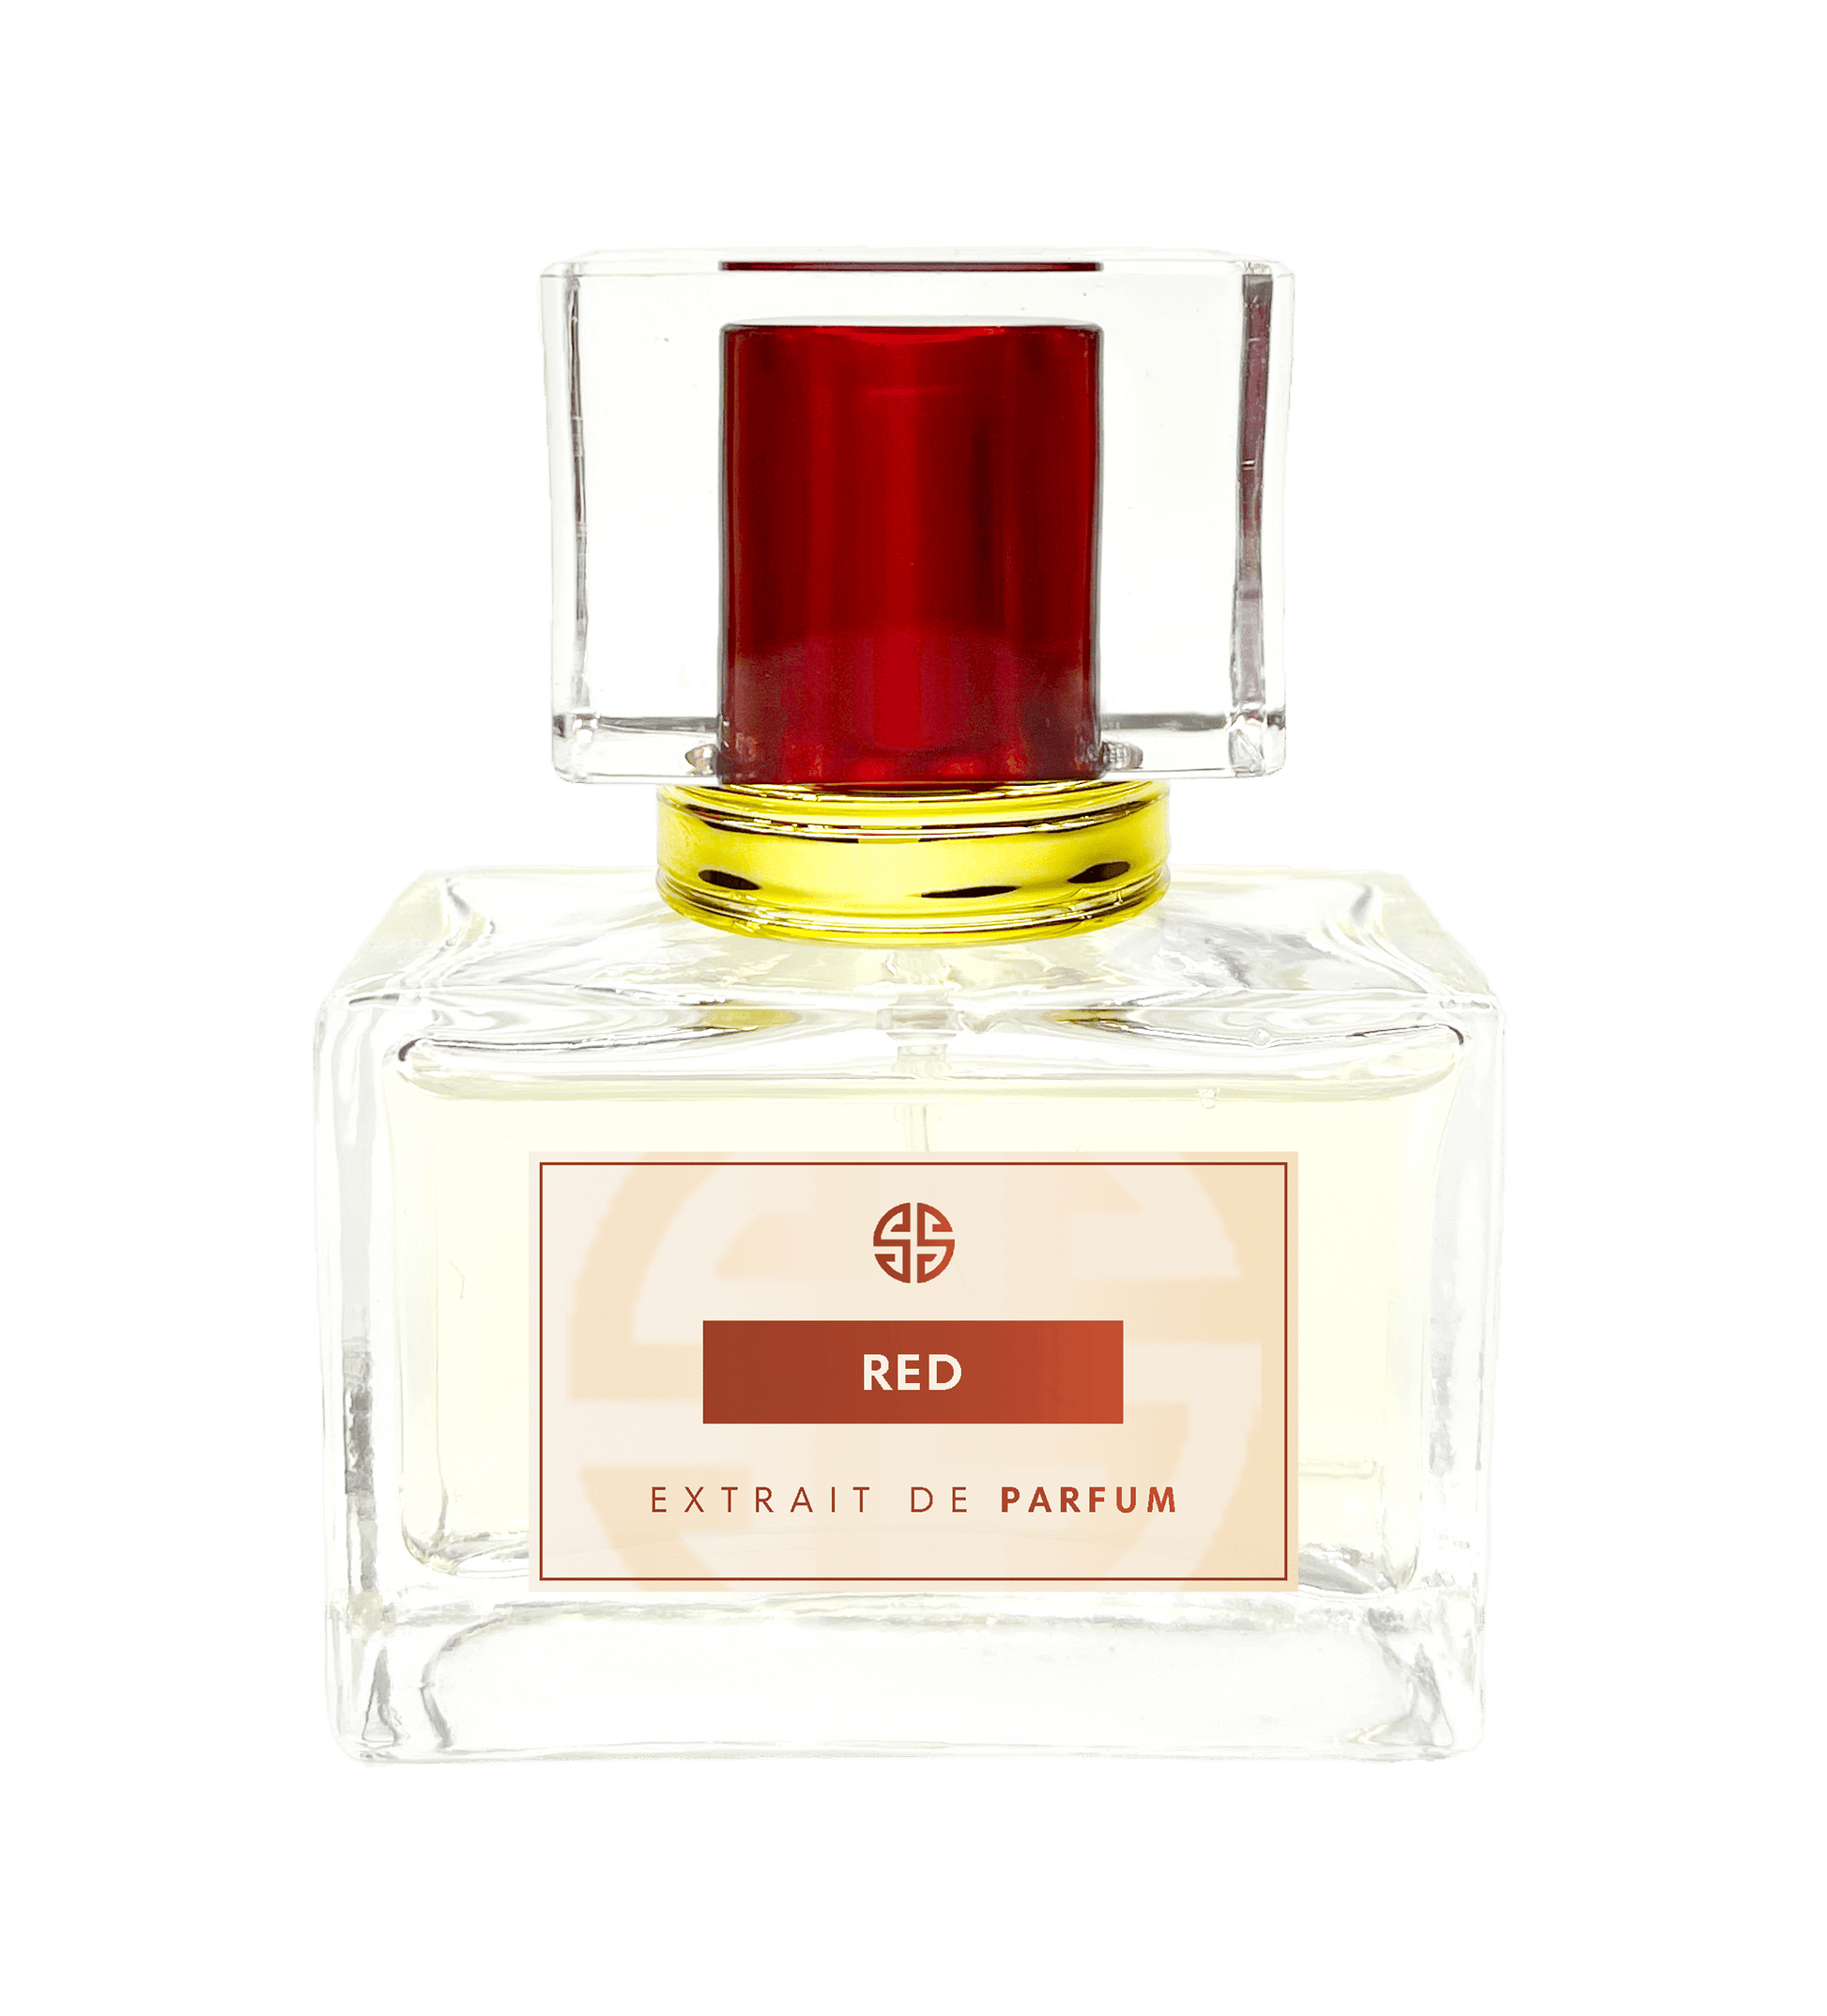 Baccarat Rouge 540 Parfum parfum - Similar Scent RED - undefined